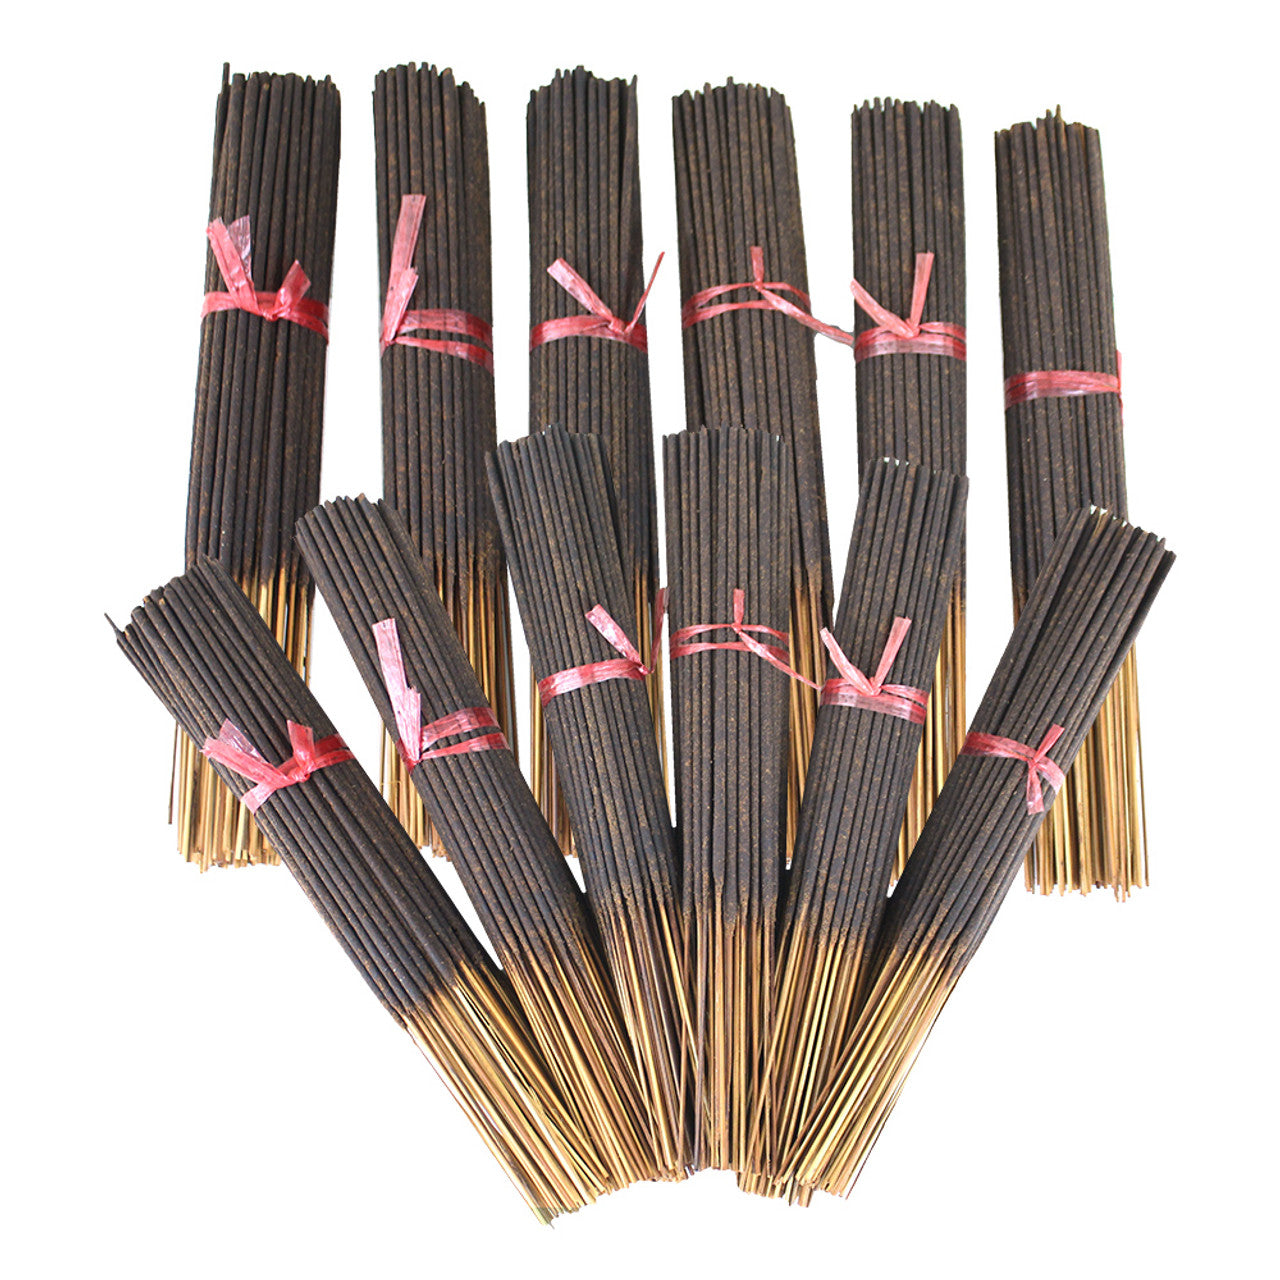 11 " Fragrant Incense Stick Bundles (approx 95-100 sticks)